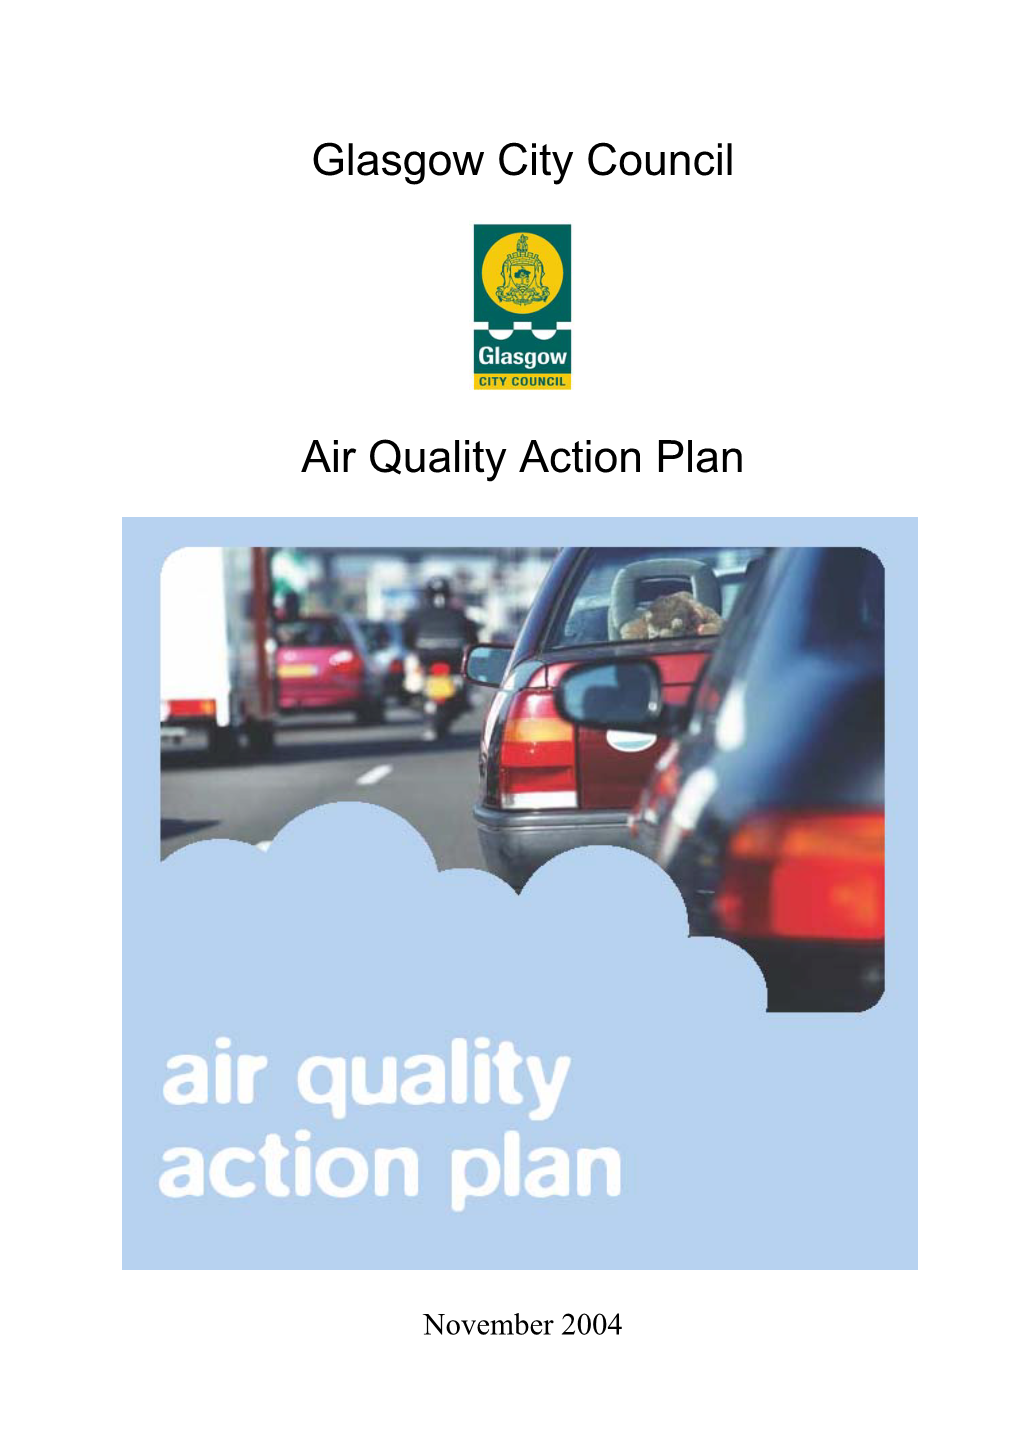 Glasgow City Council Air Quality Action Plan